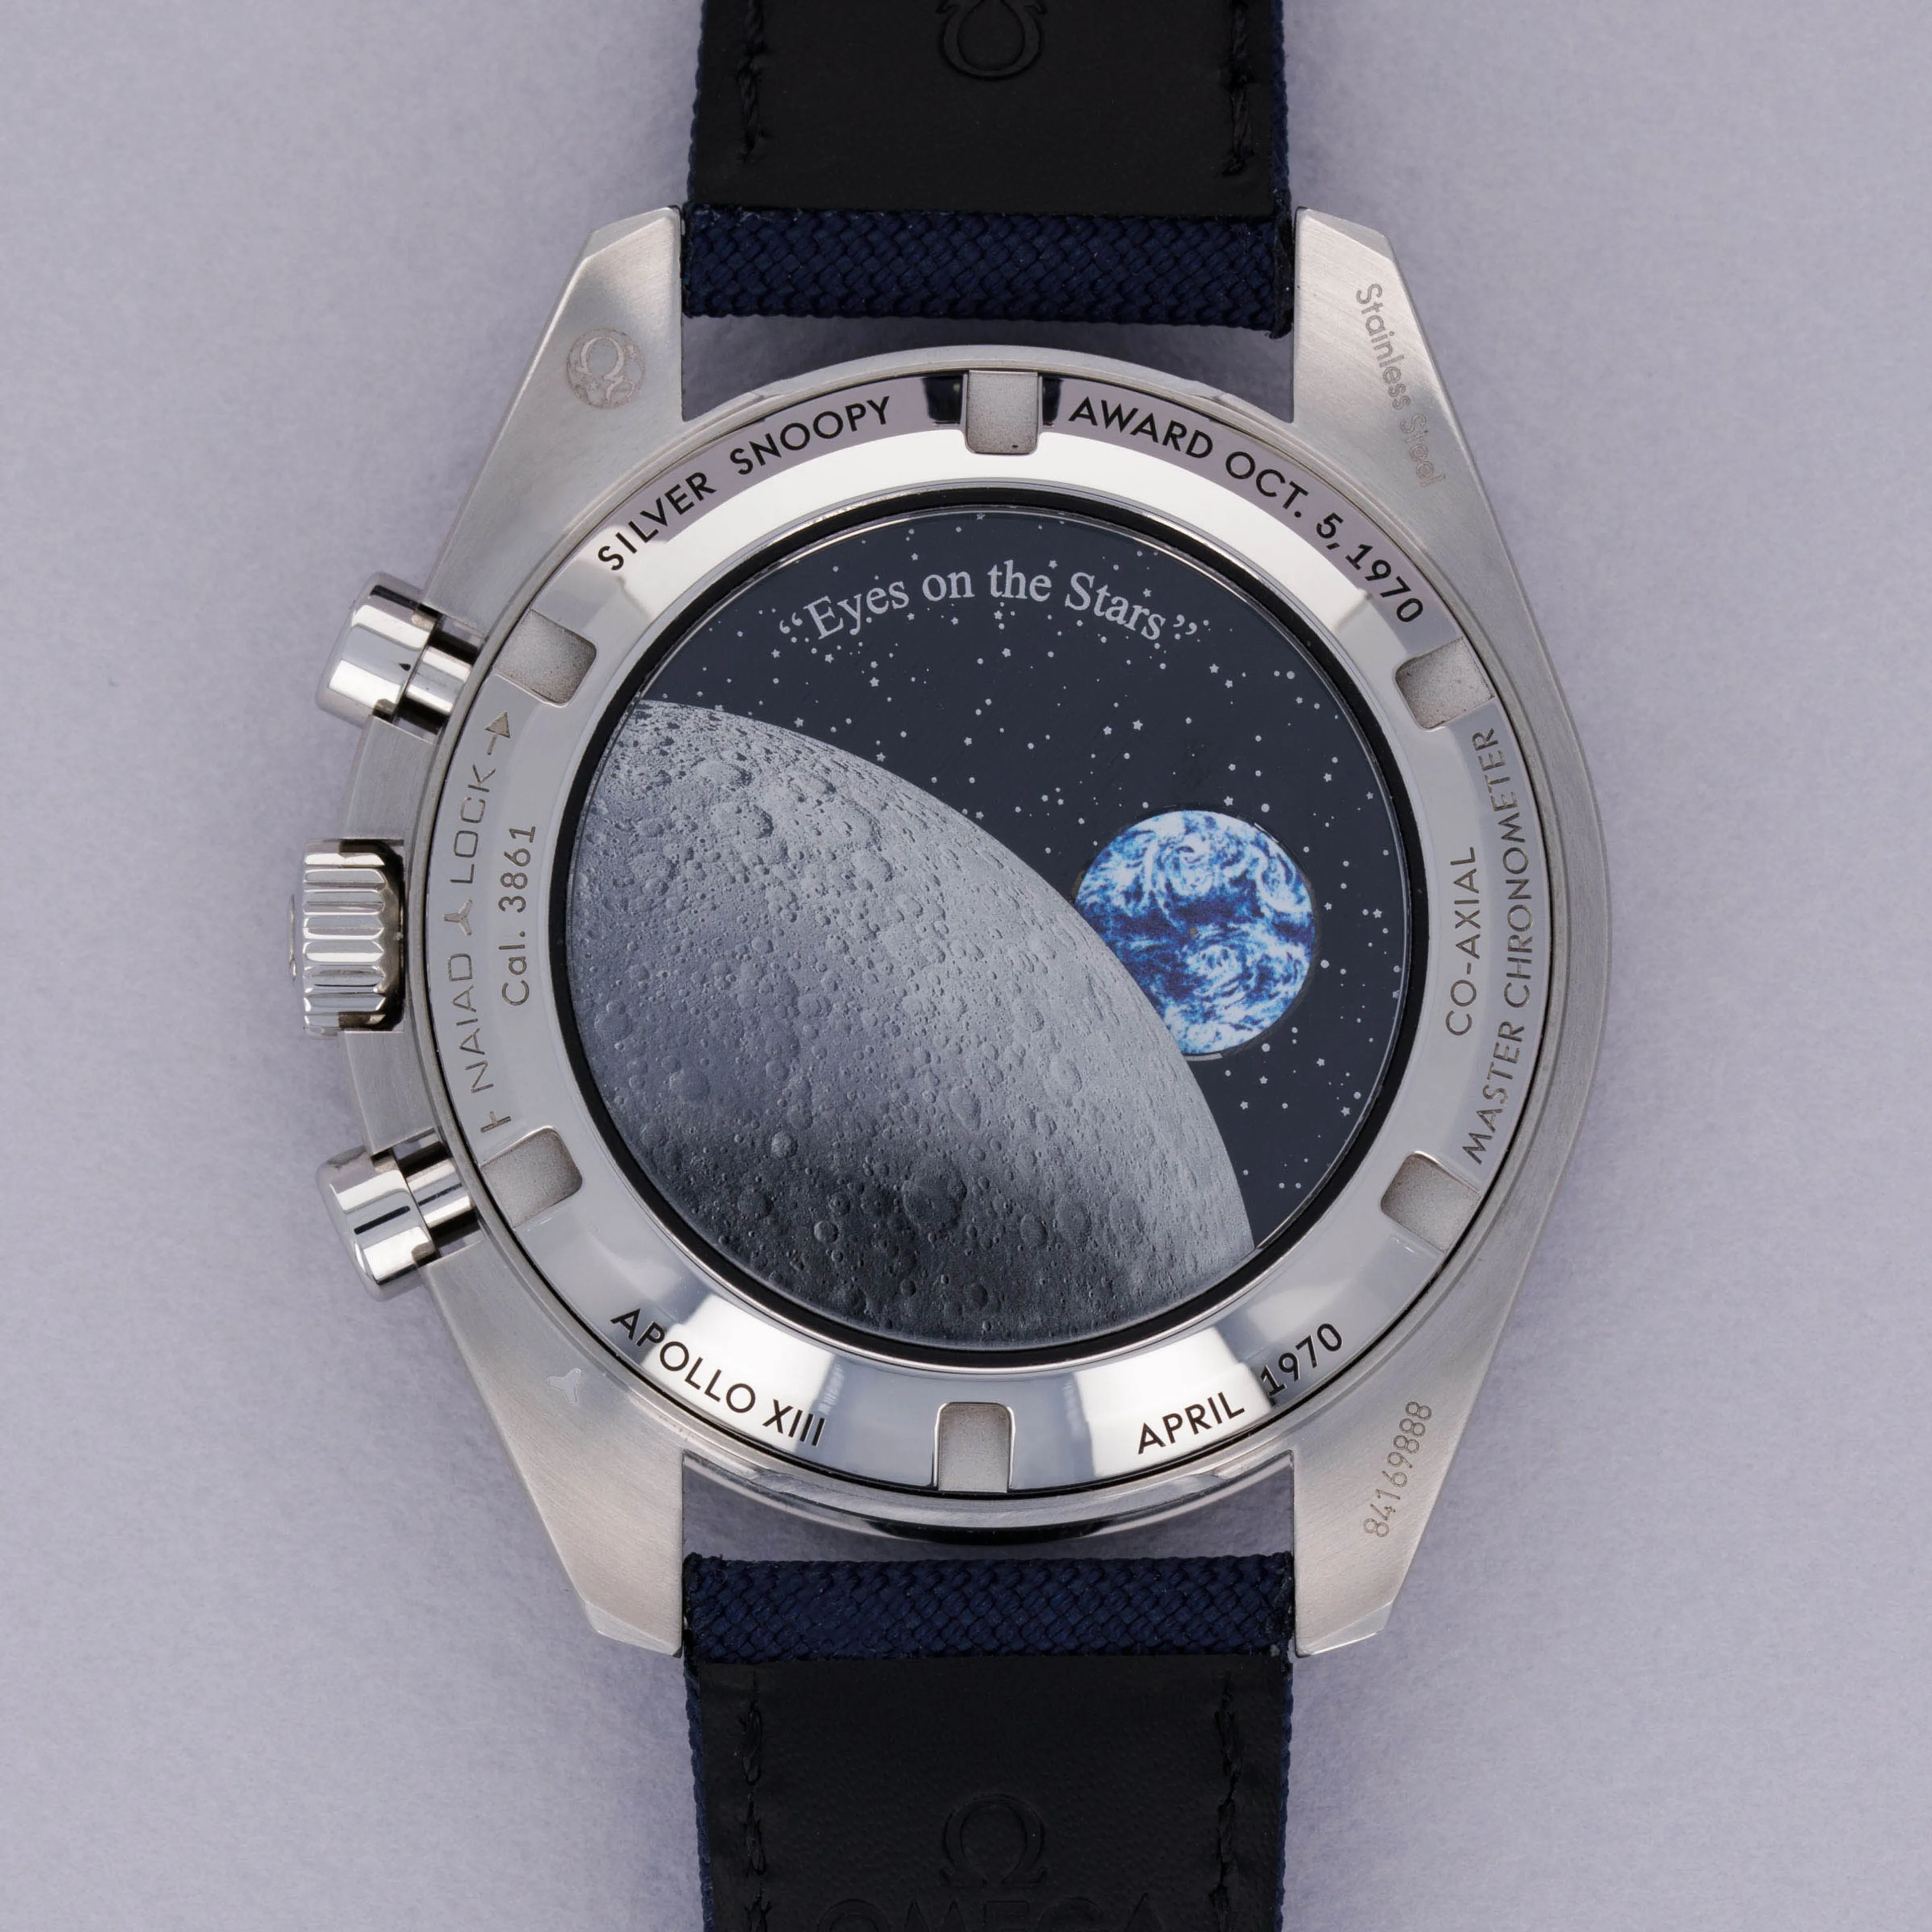 Omega Speedmaster Moon watch 310.32.42.50.02.001 42mm Stainless steel Silver 5